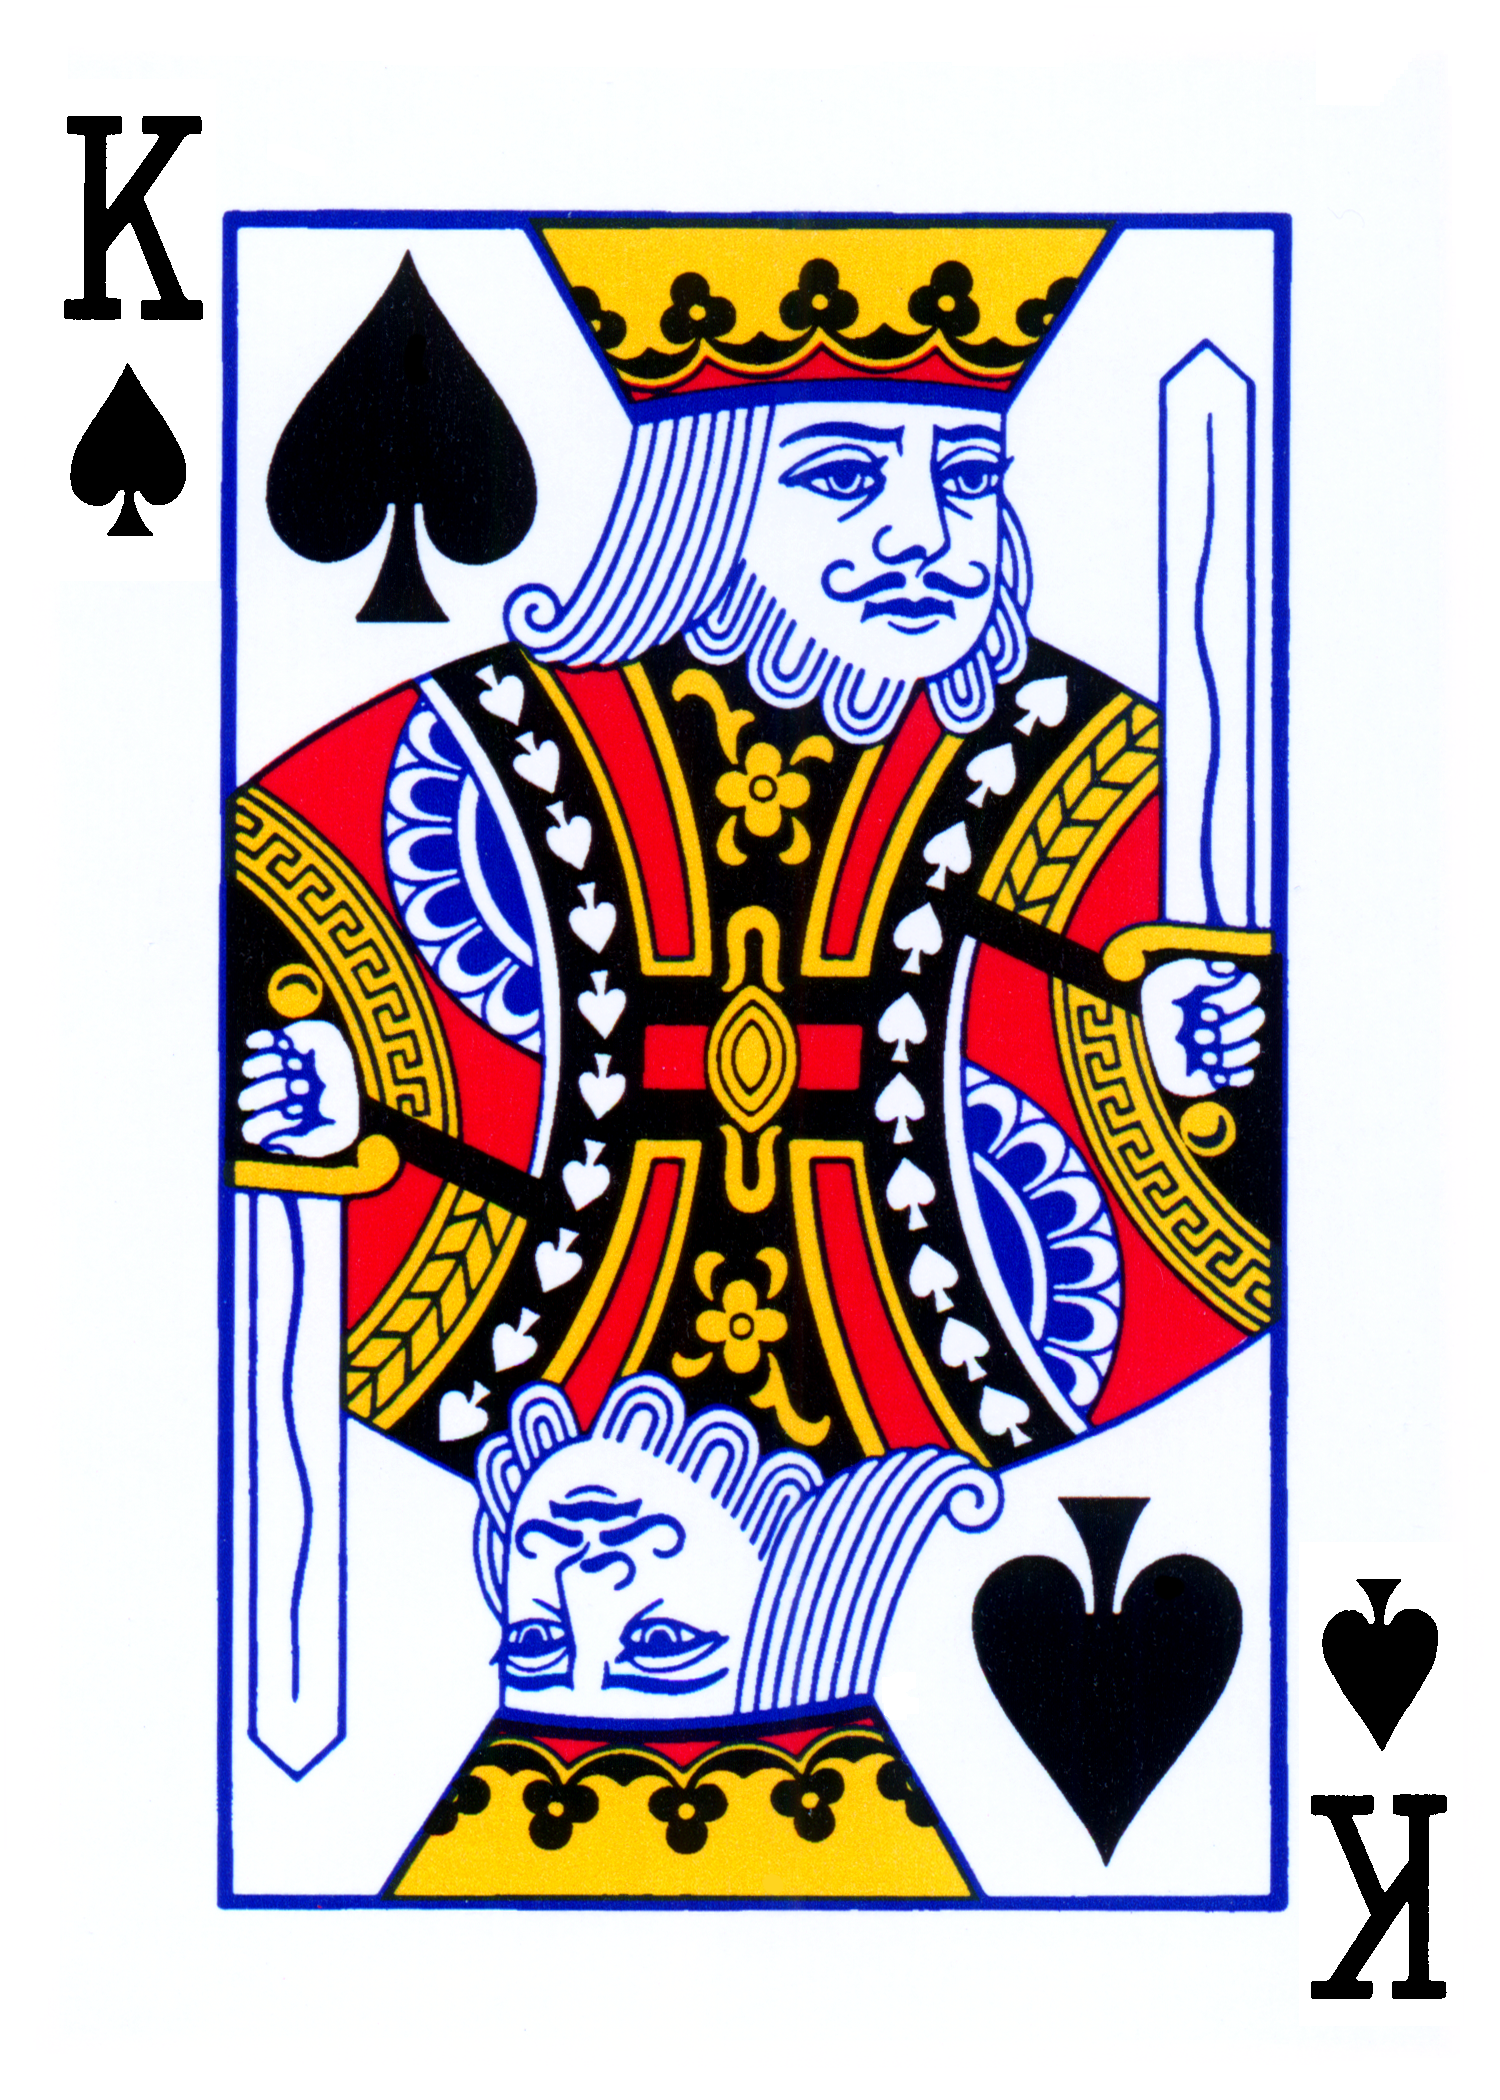 King (playing card) - Wikipedia, the free encyclopedia